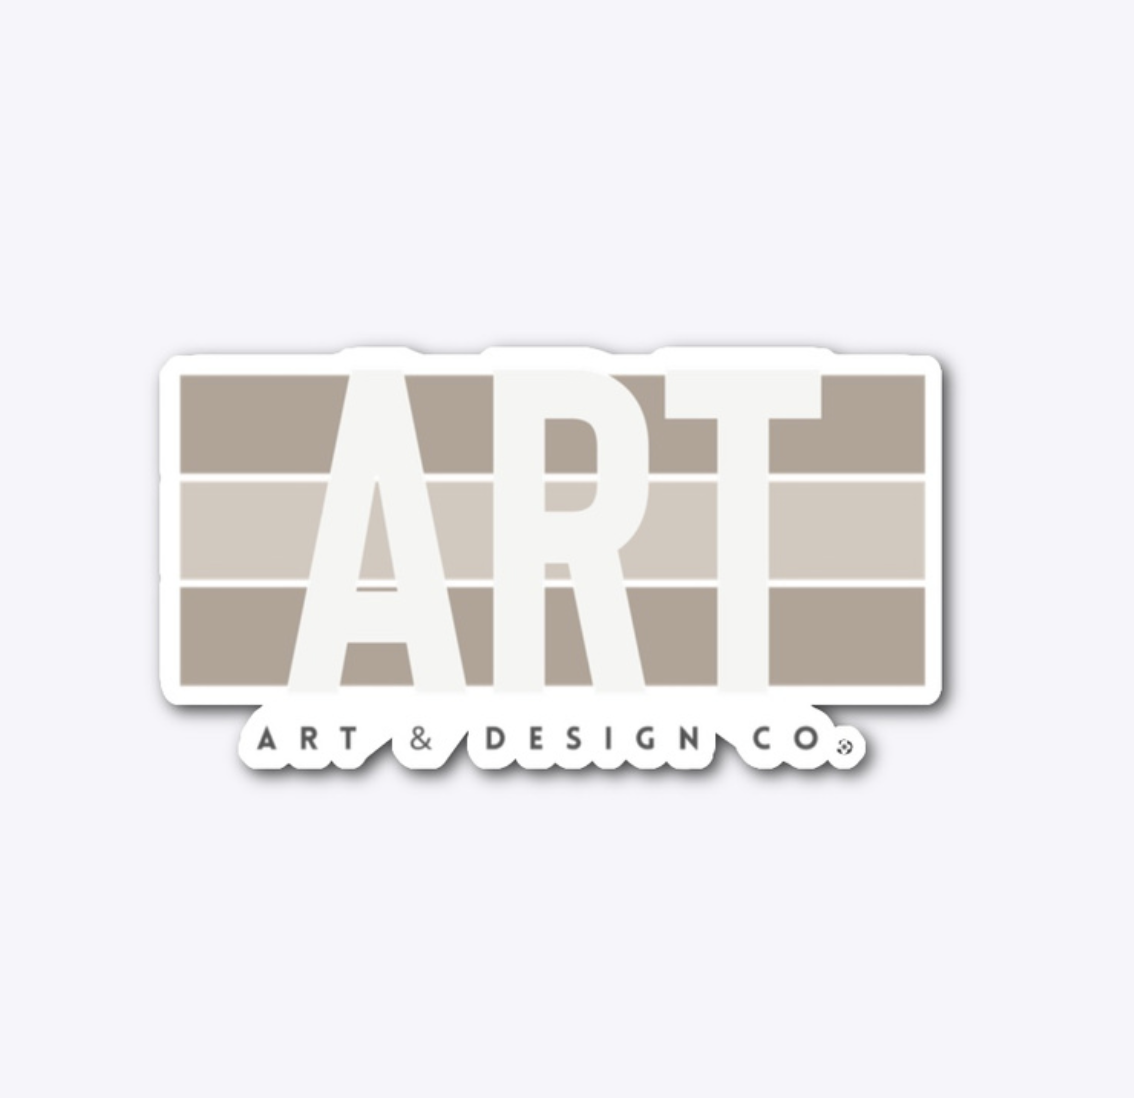 Art & Design Studio Premade Logo